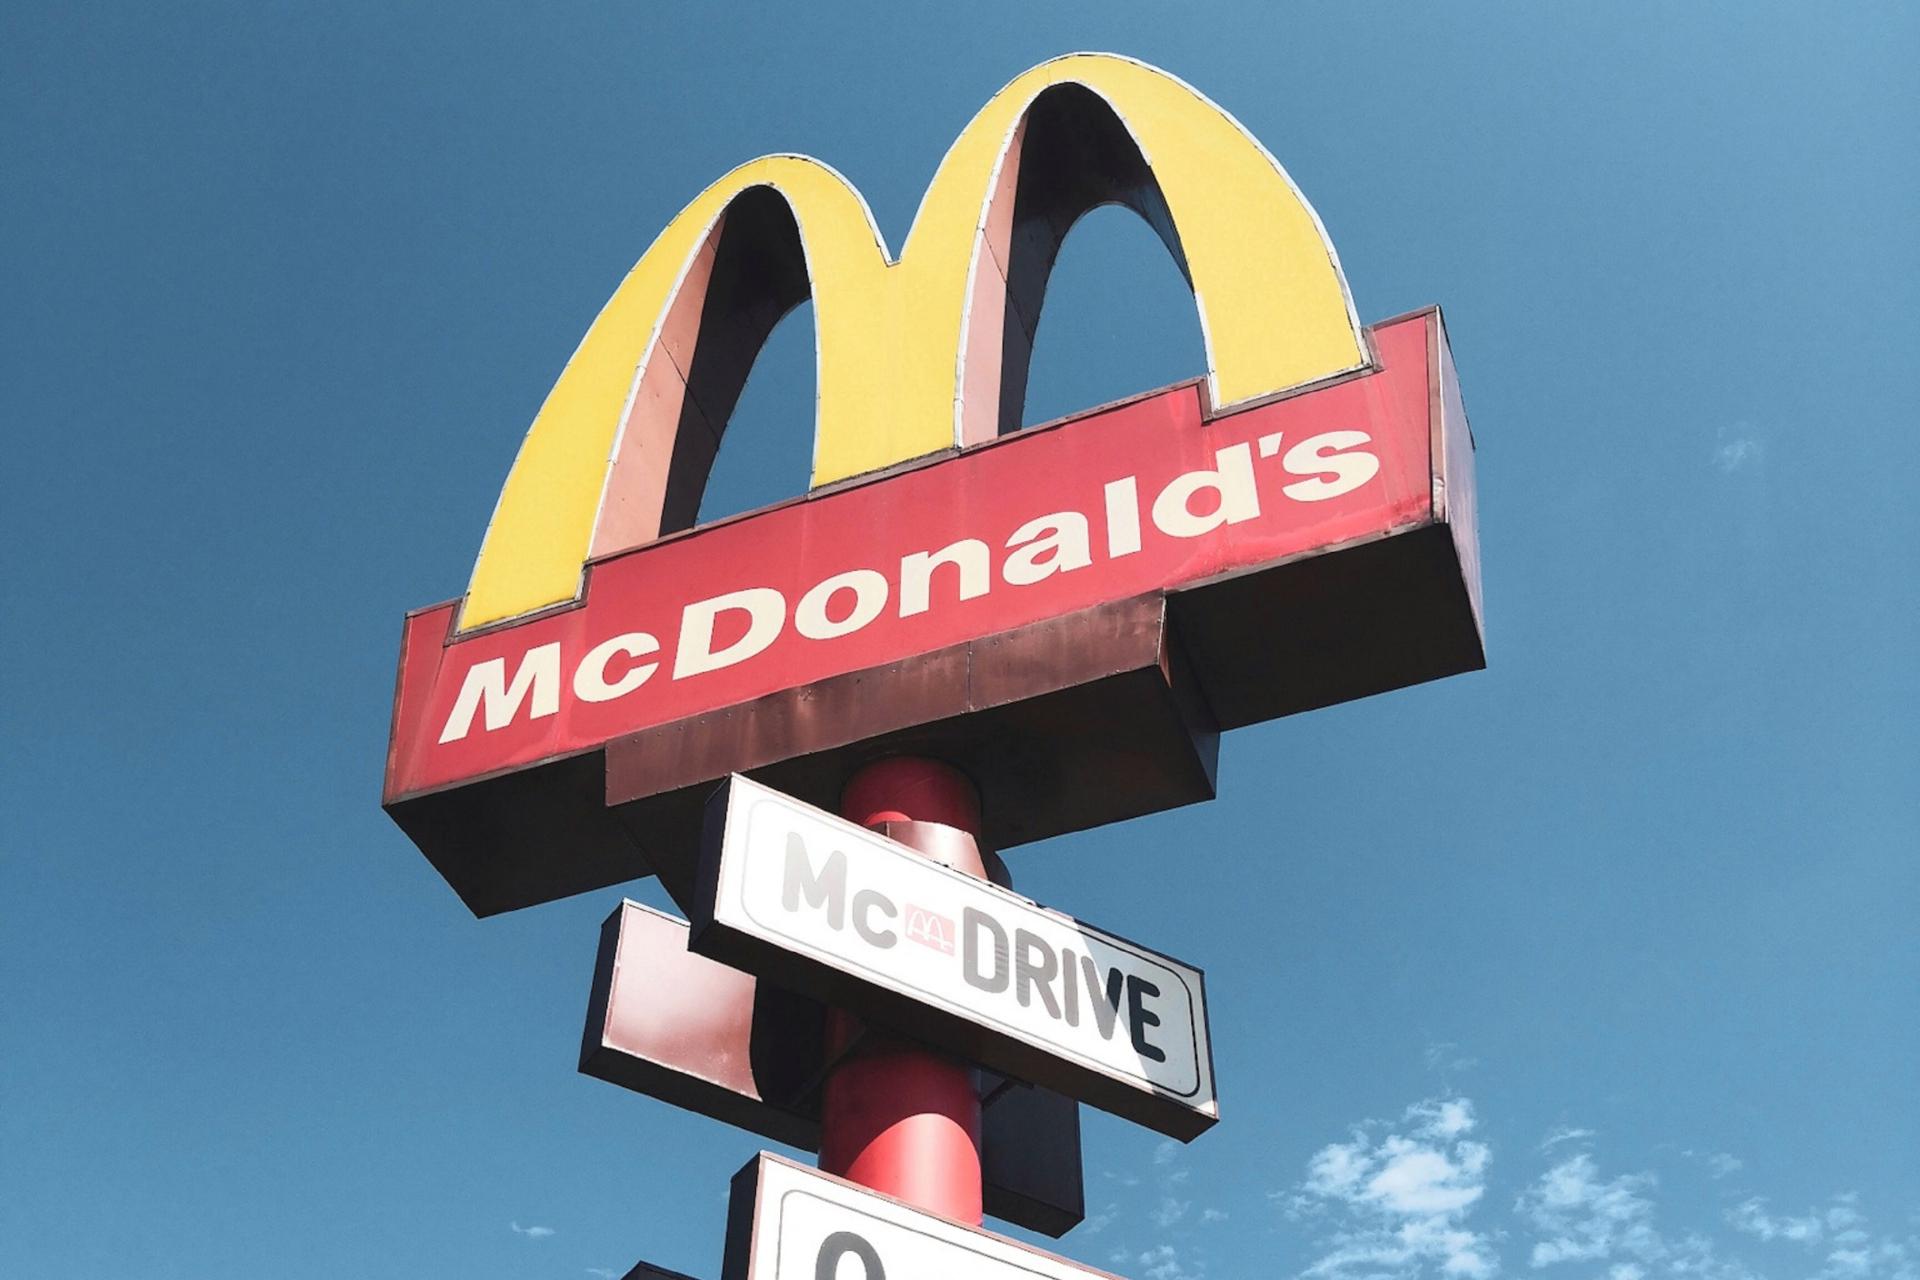 McDonald's Golden Arches sign